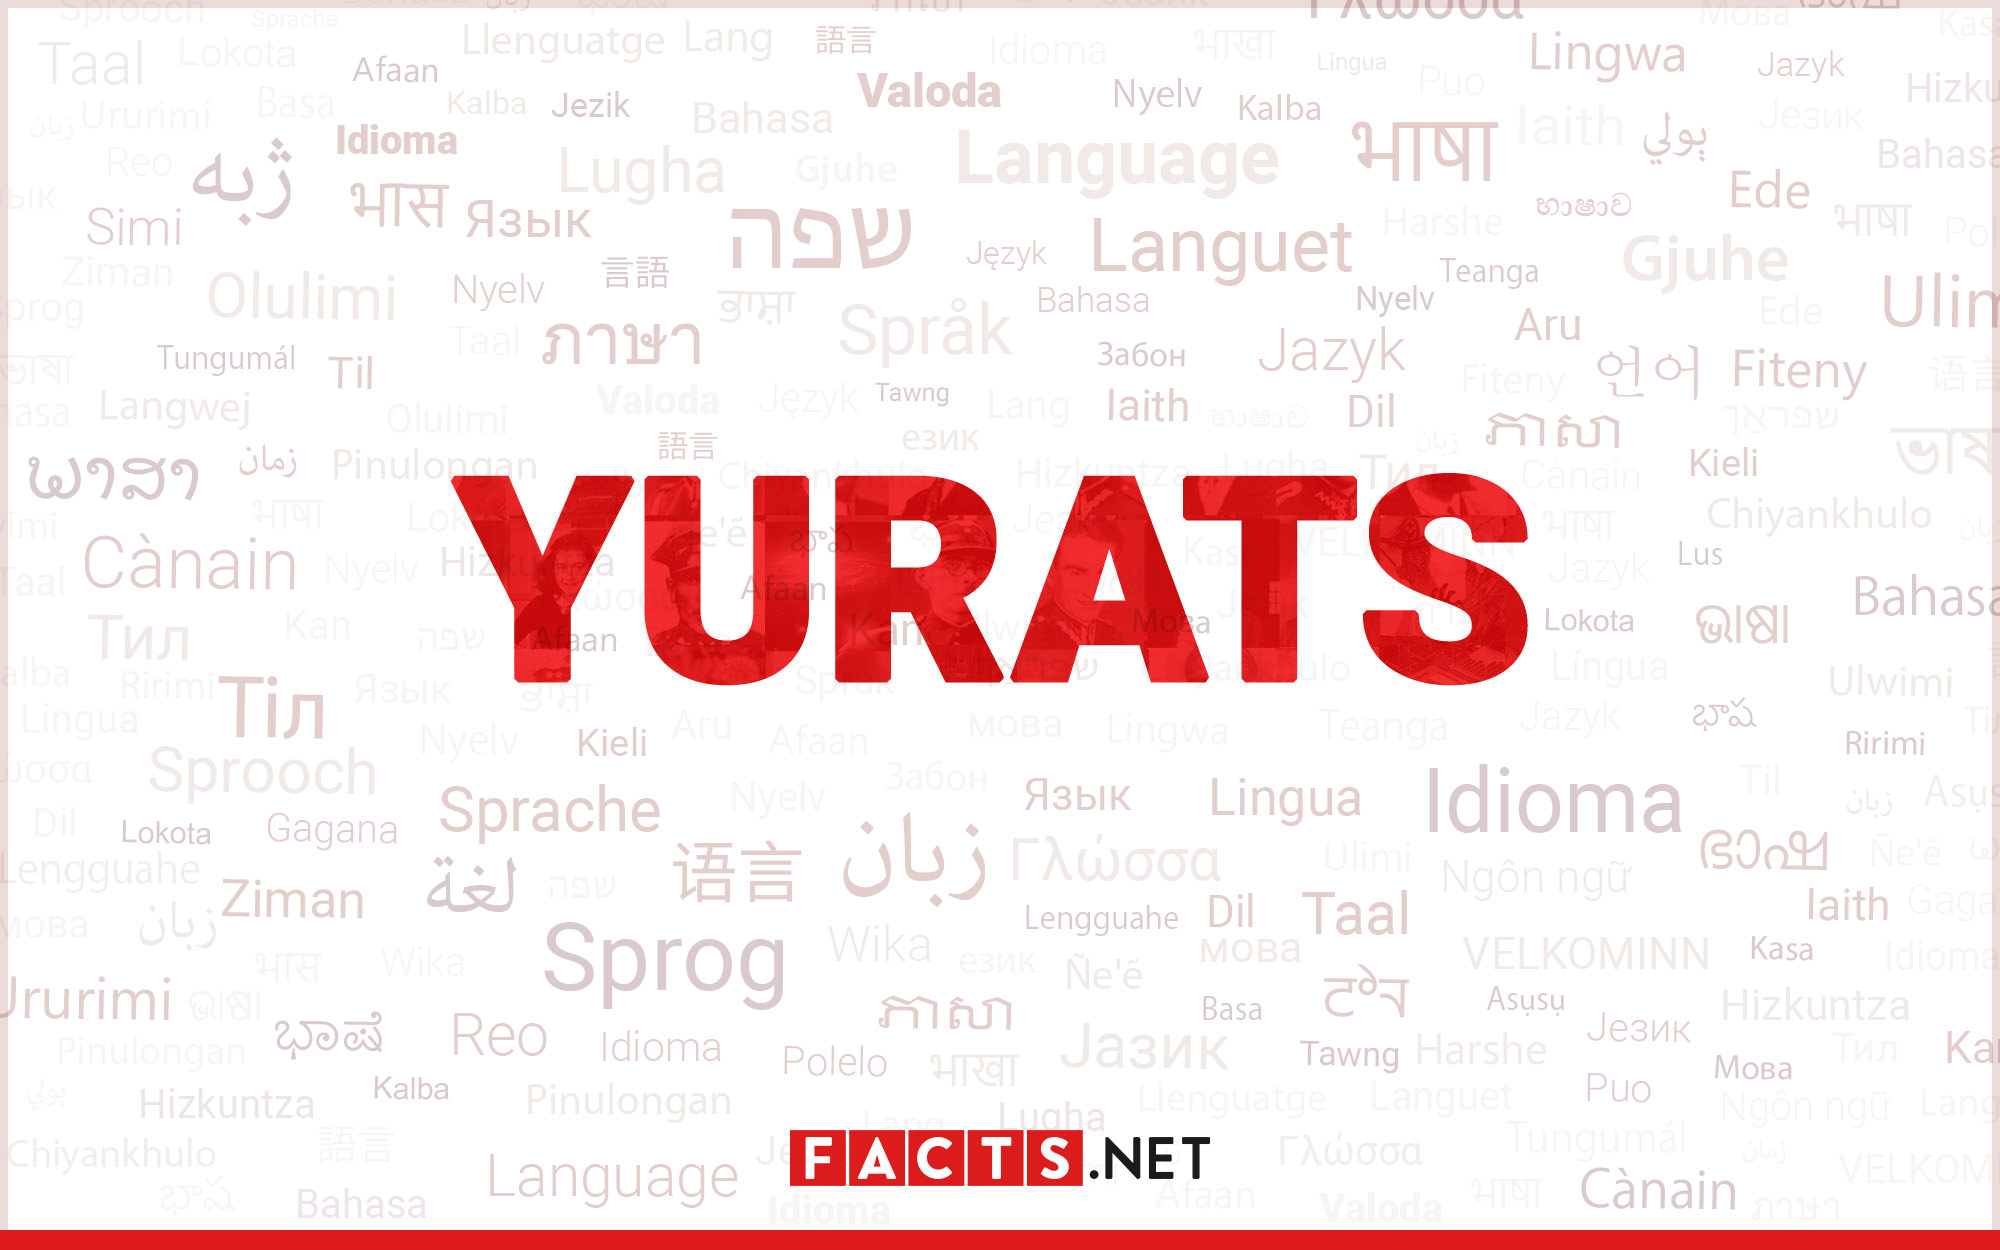 19-astonishing-facts-about-yurats